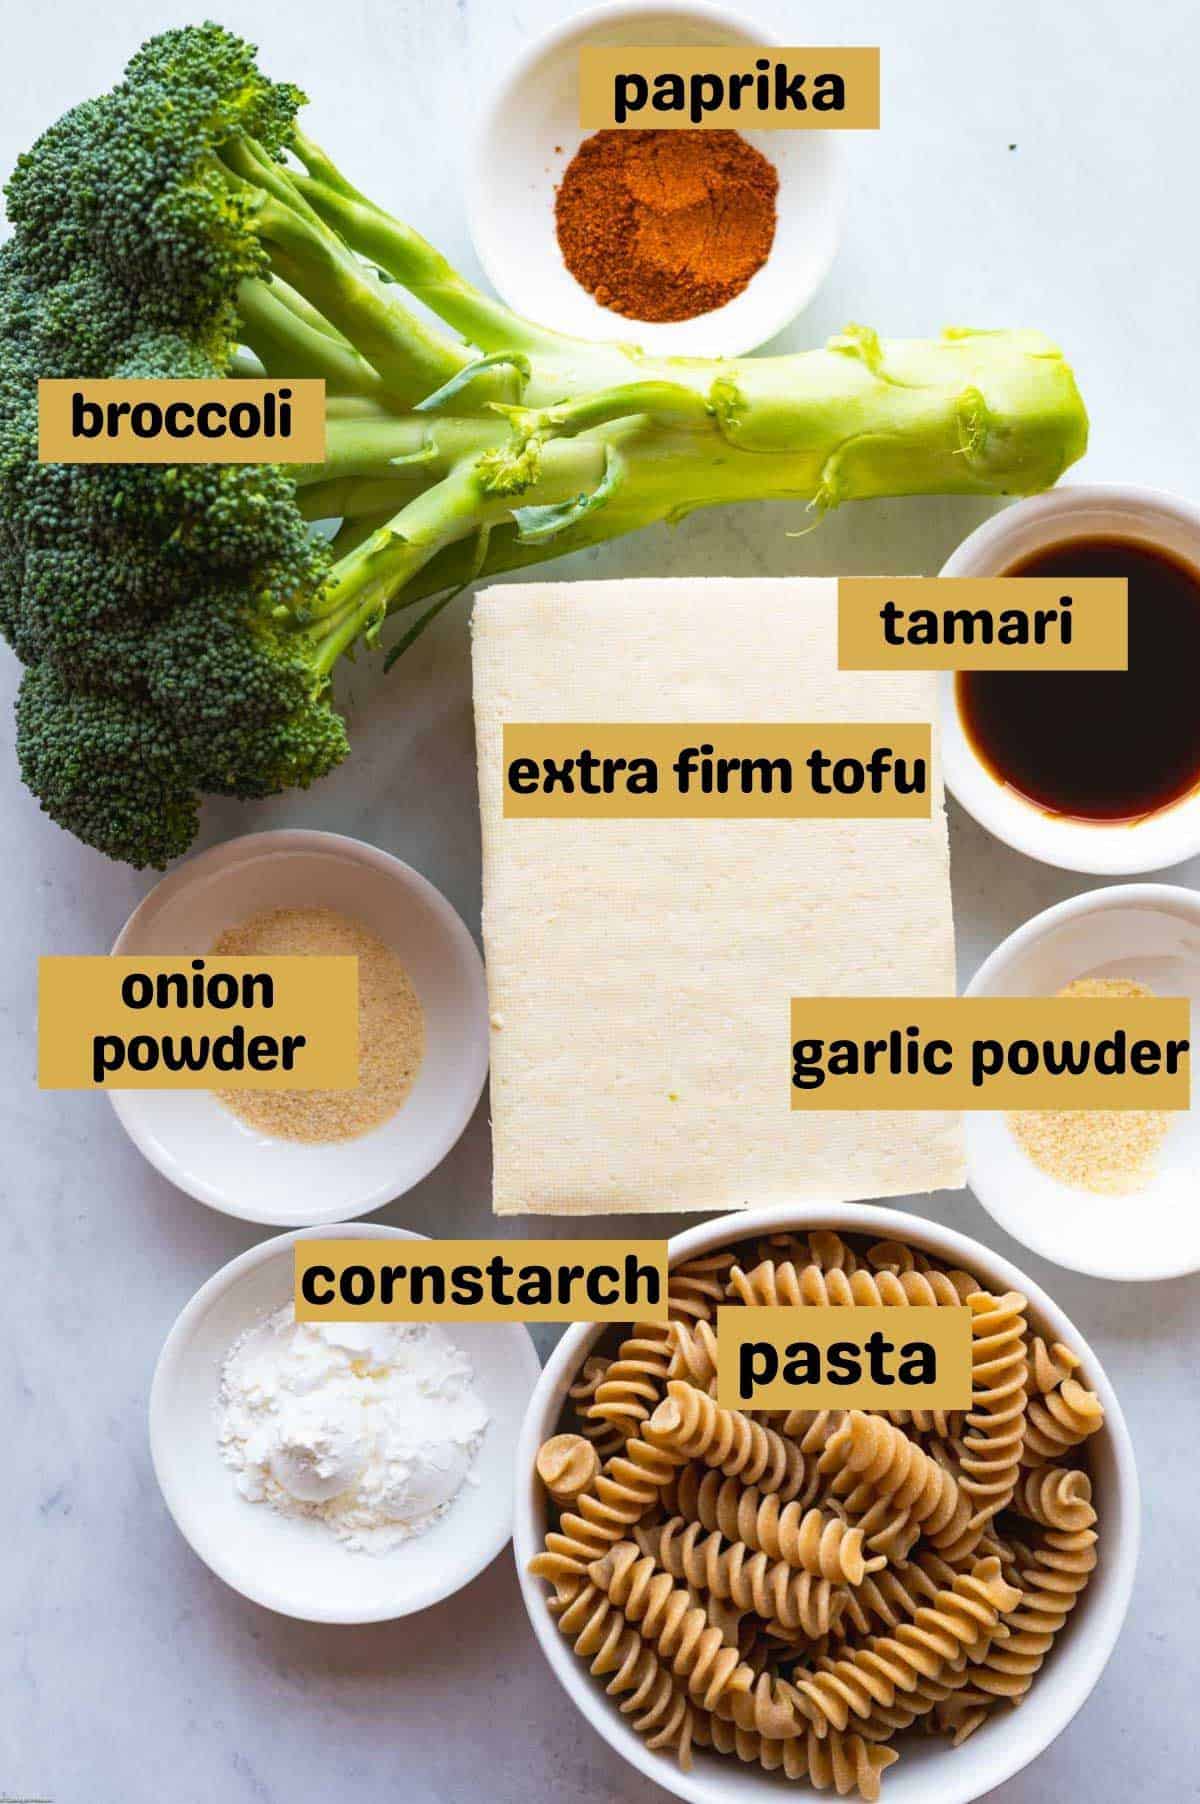 Broccoli, paprika, extra firm tofu, dried pasta, cornstarch, garlic powder, onion powder, and tamari in bowls on a white backdrop.